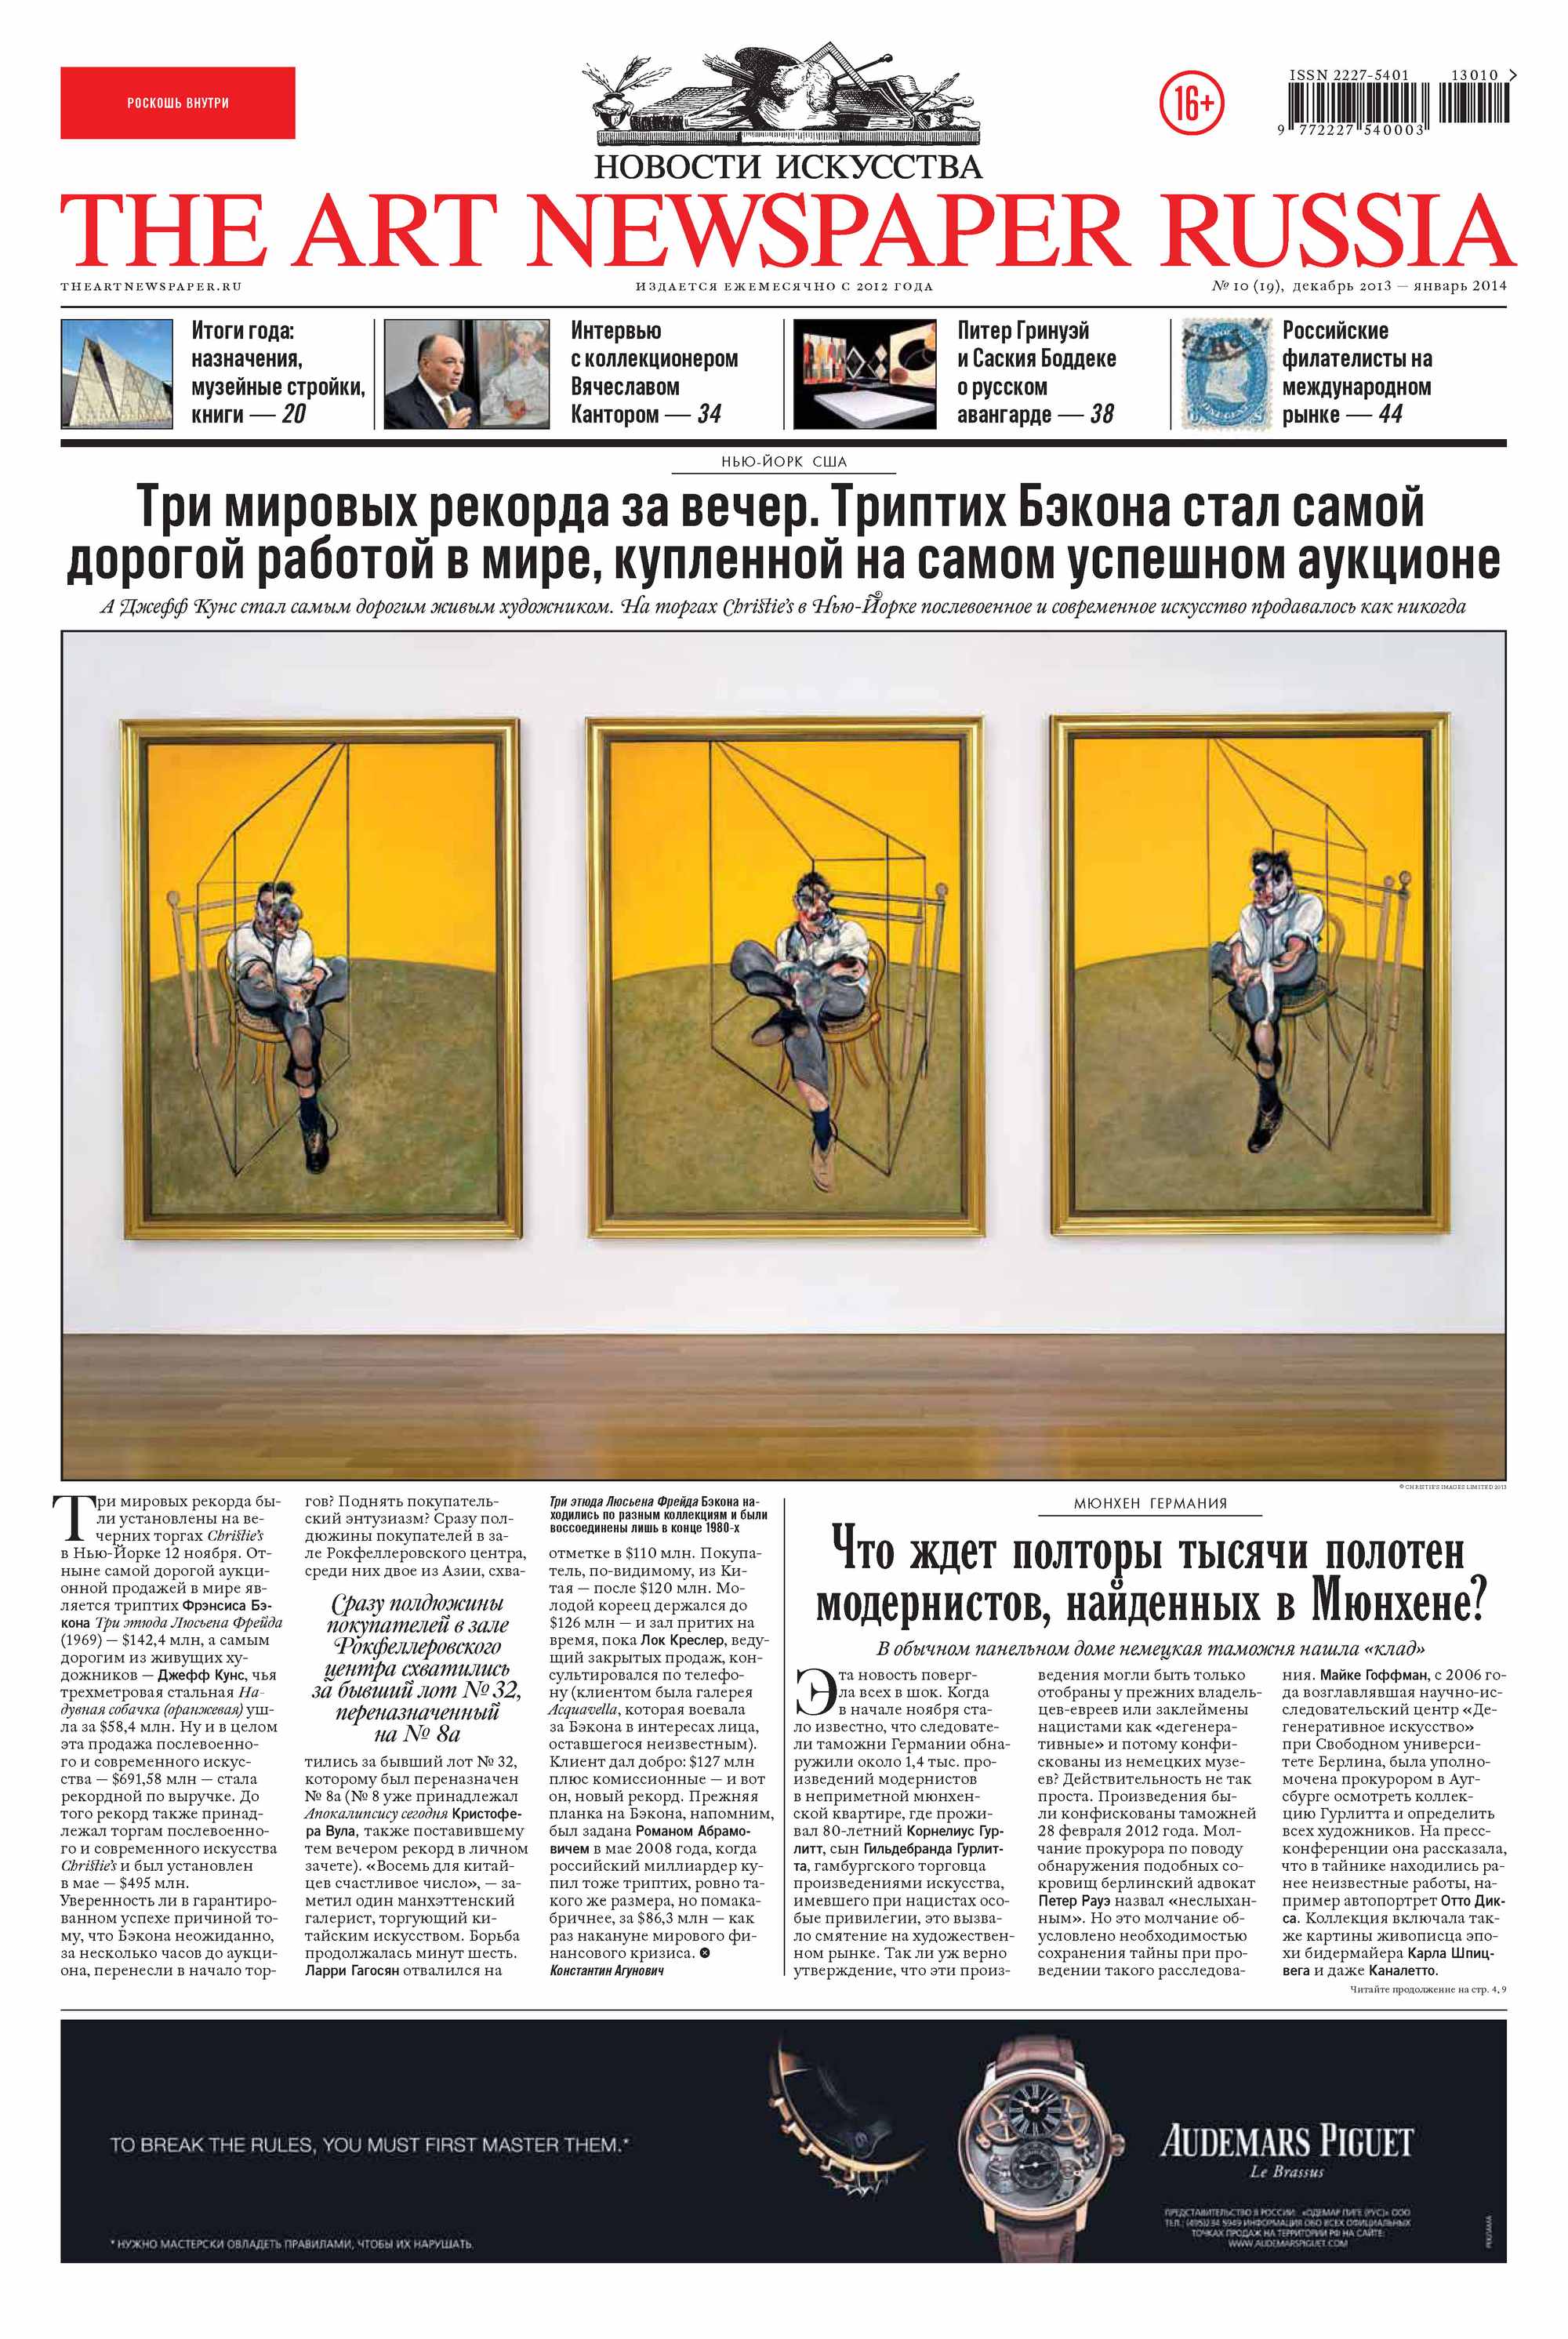 The Art Newspaper Russia№10 / декабрь 2013 – январь 2014